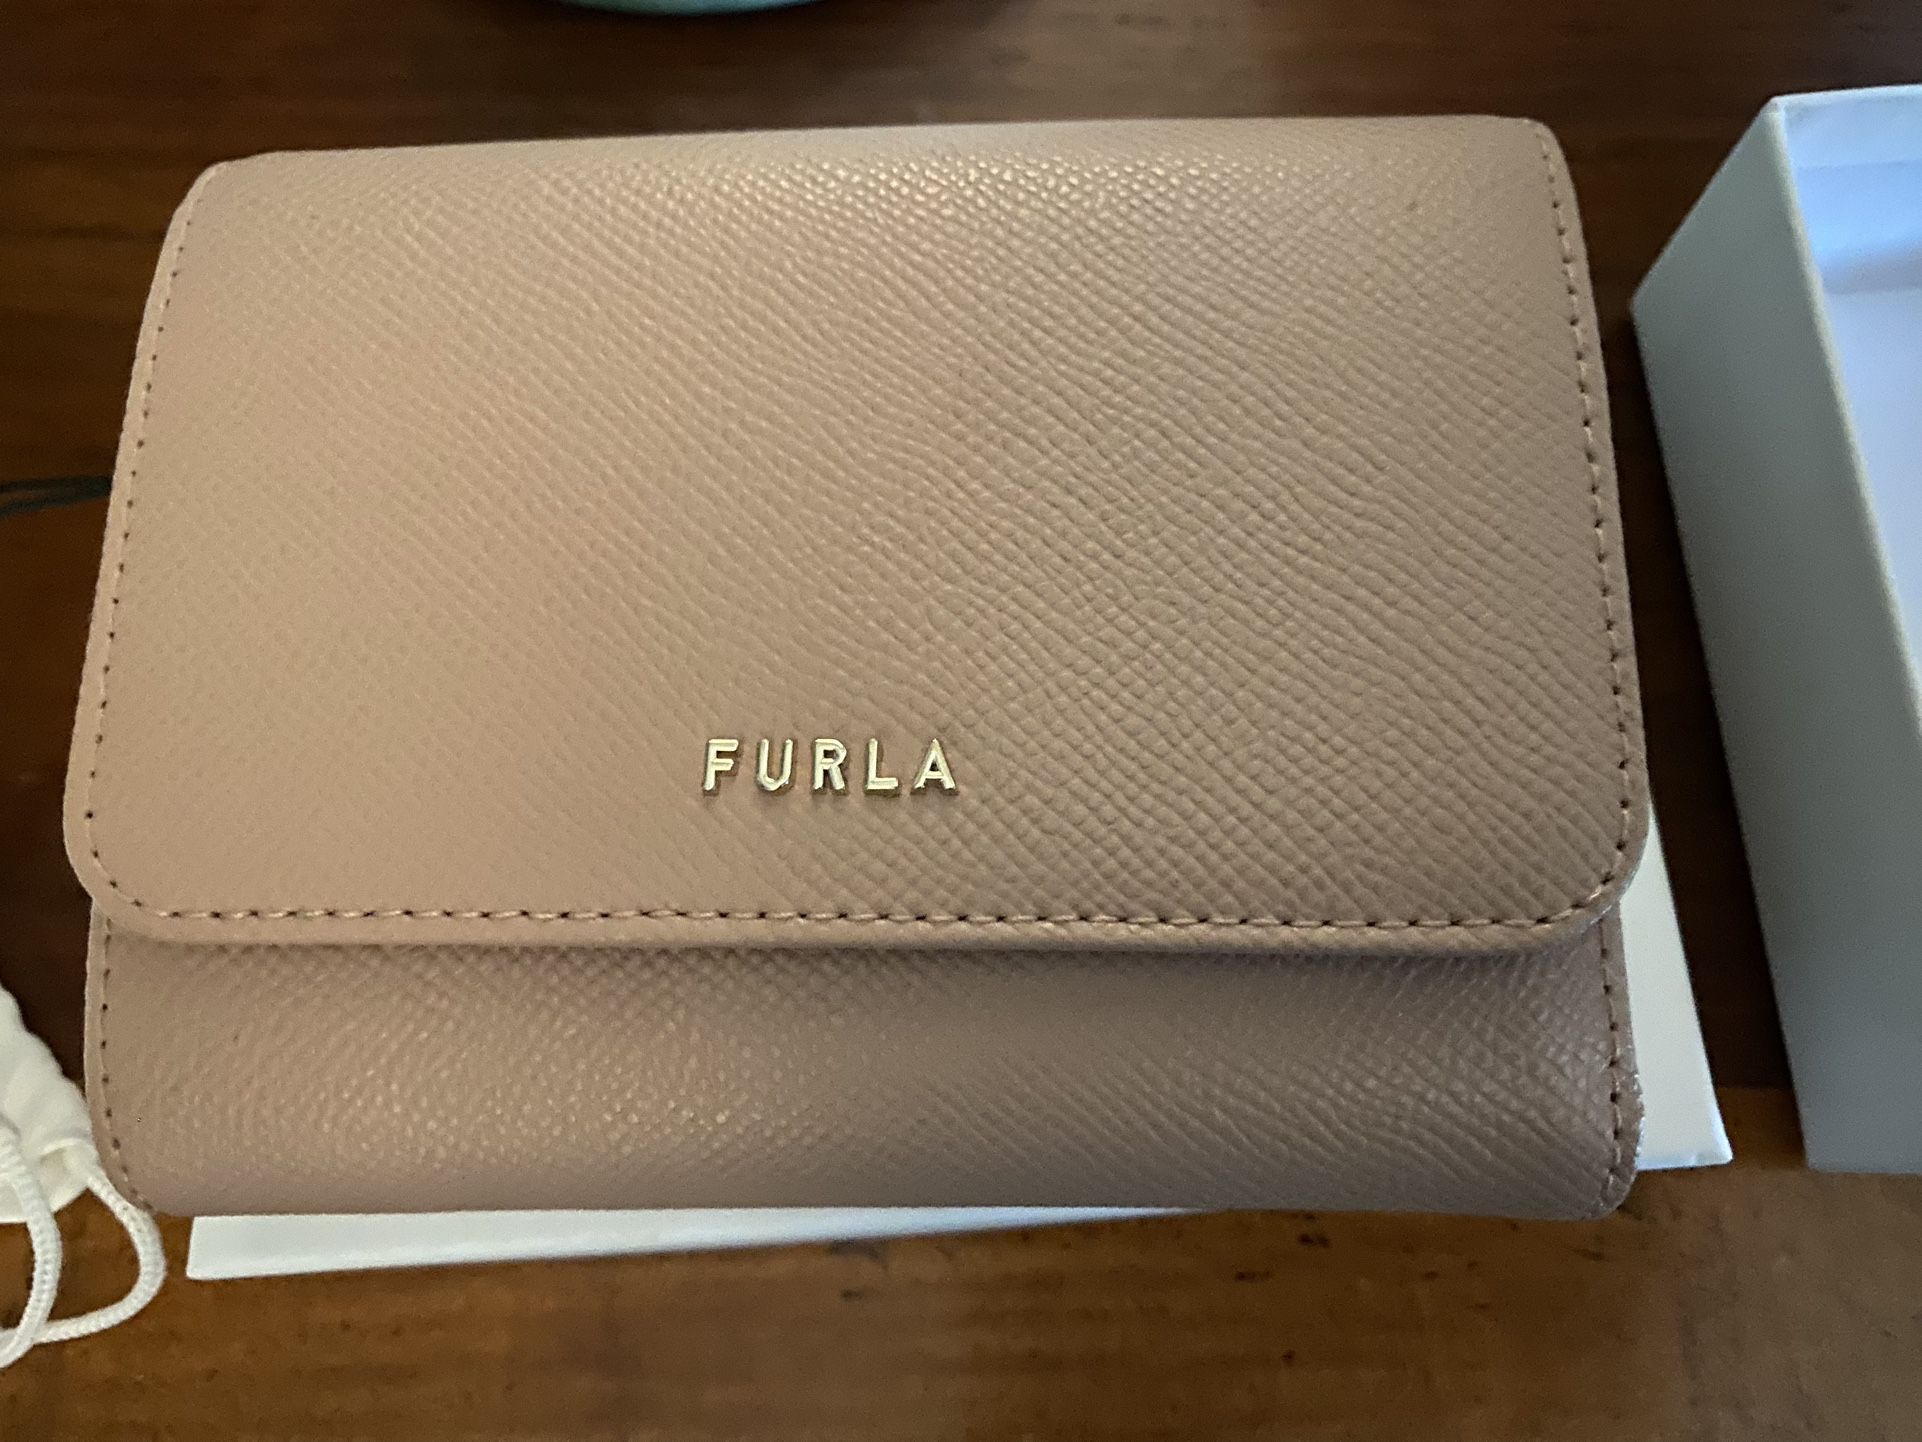 New In Box Furla Pelle Wallet Originally Around $150